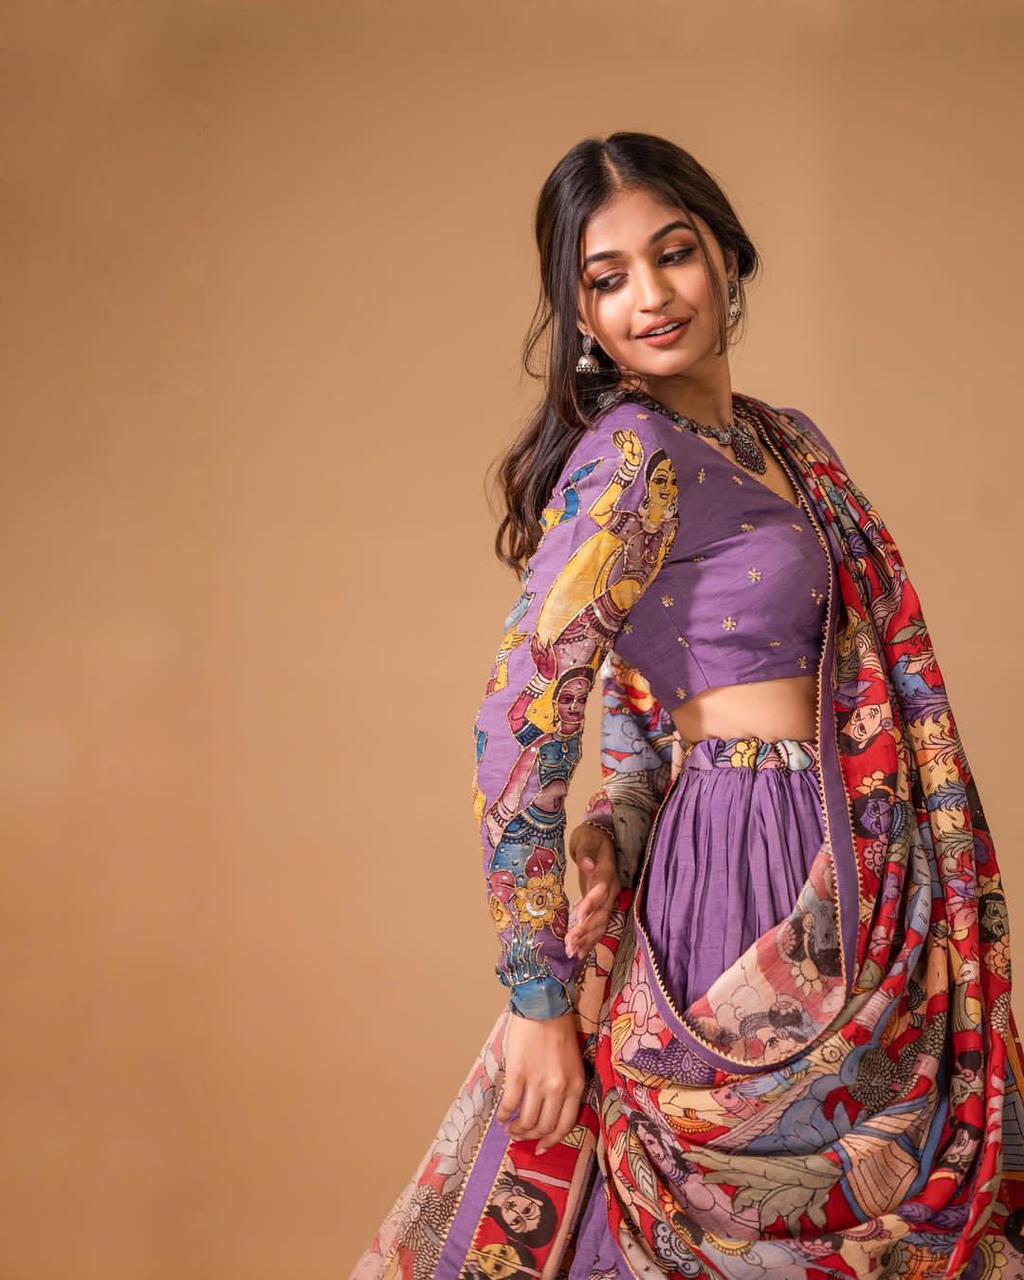 Traditional Half Saree For Wedding | Half Saree For Girls